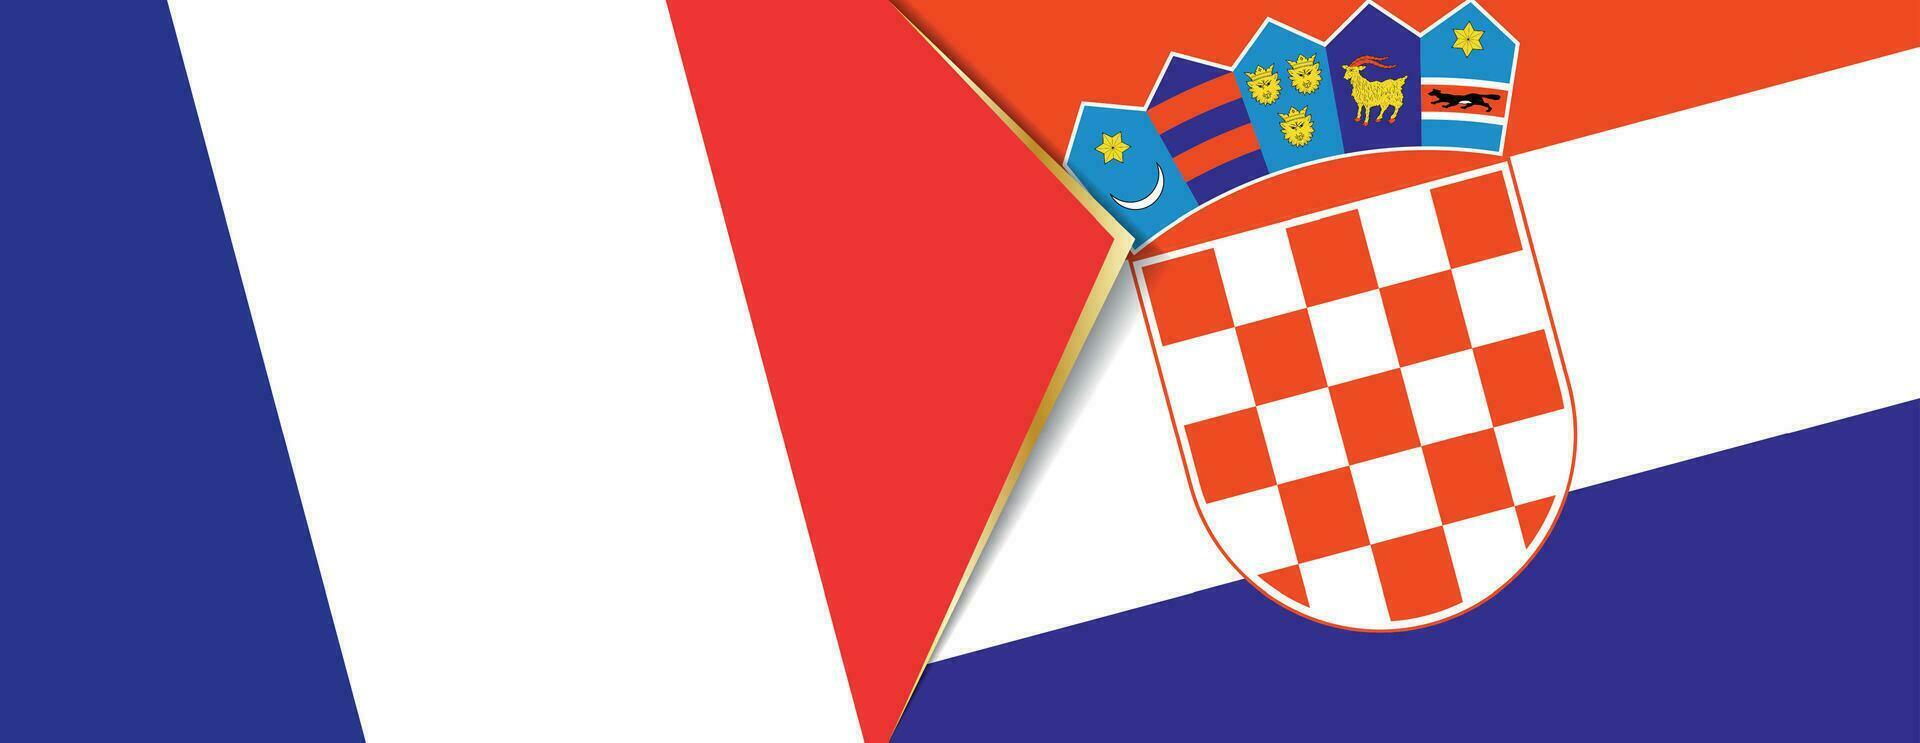 Frankreich und Kroatien Flaggen, zwei Vektor Flaggen.